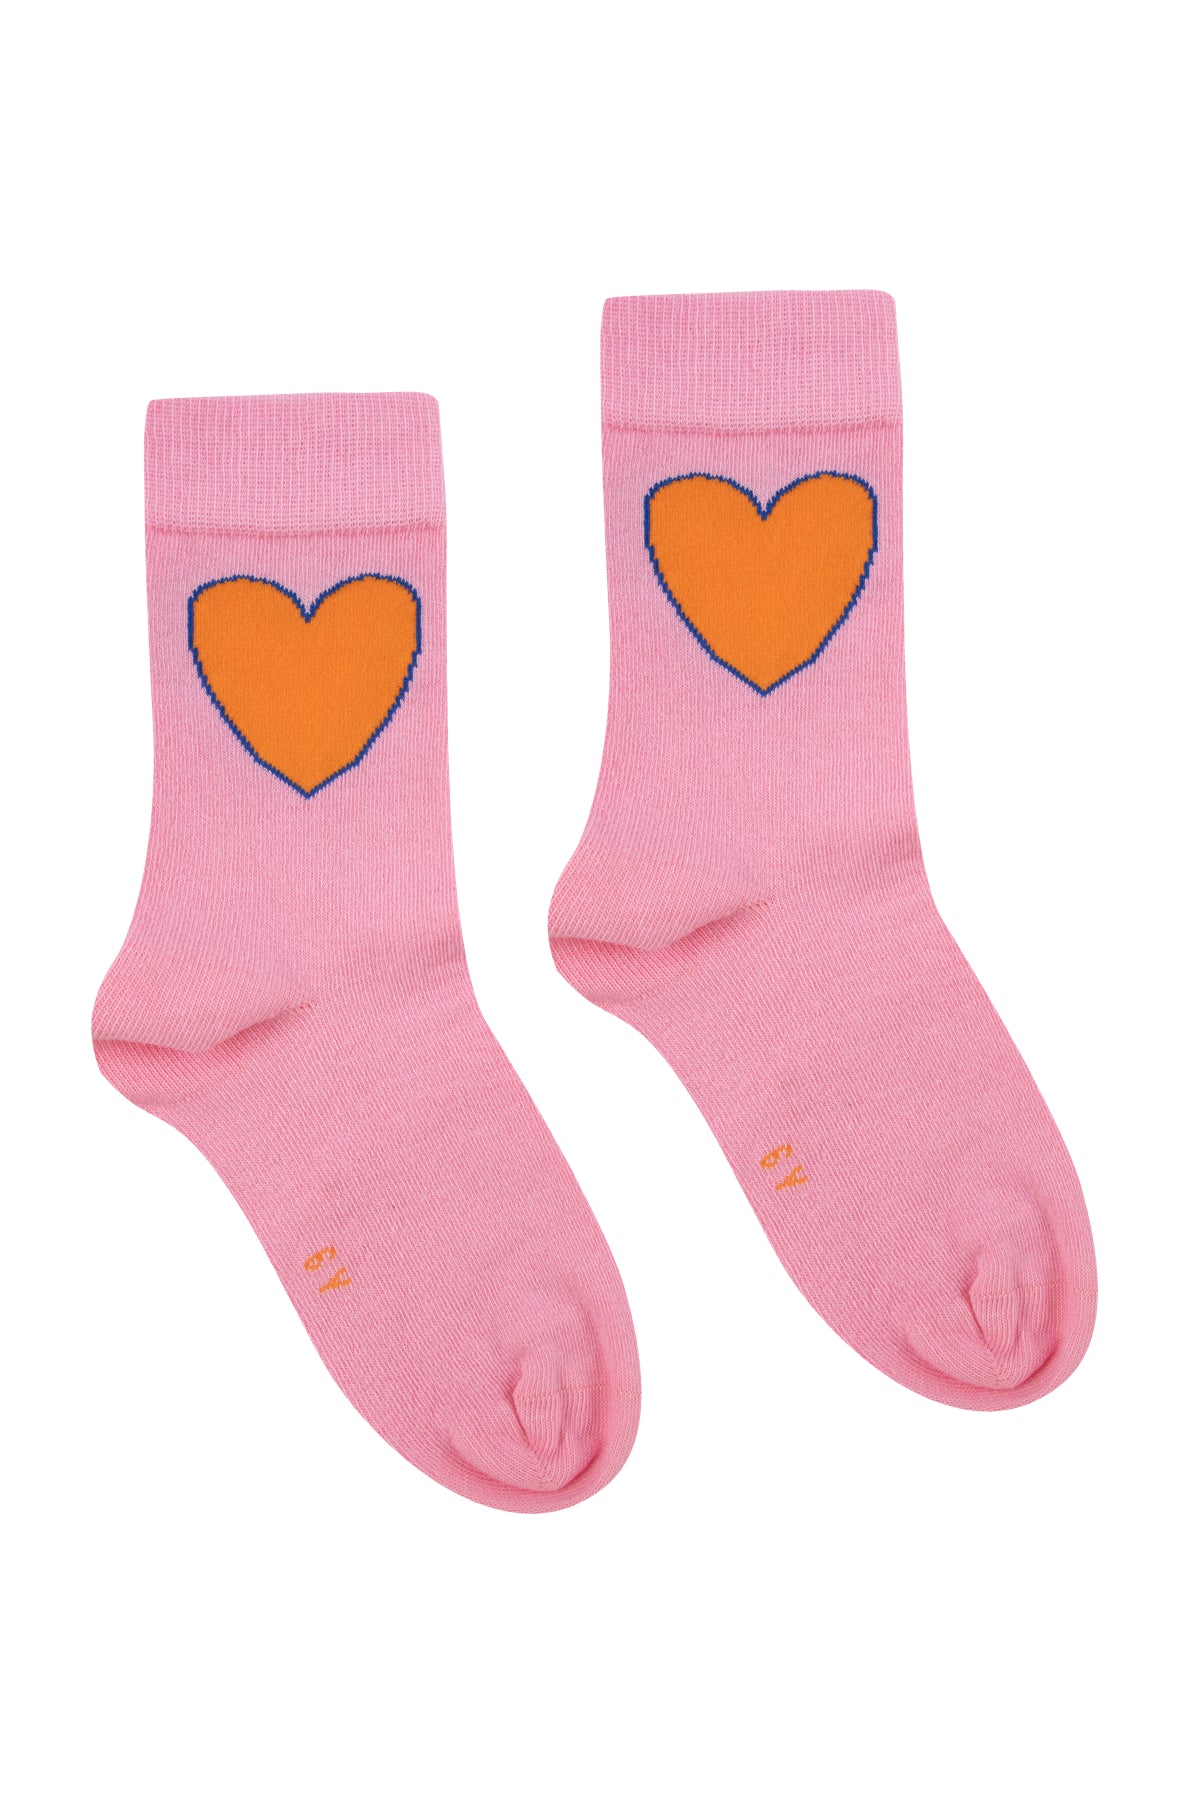 Tiny Cottons Hearts Medium Socks - Pink